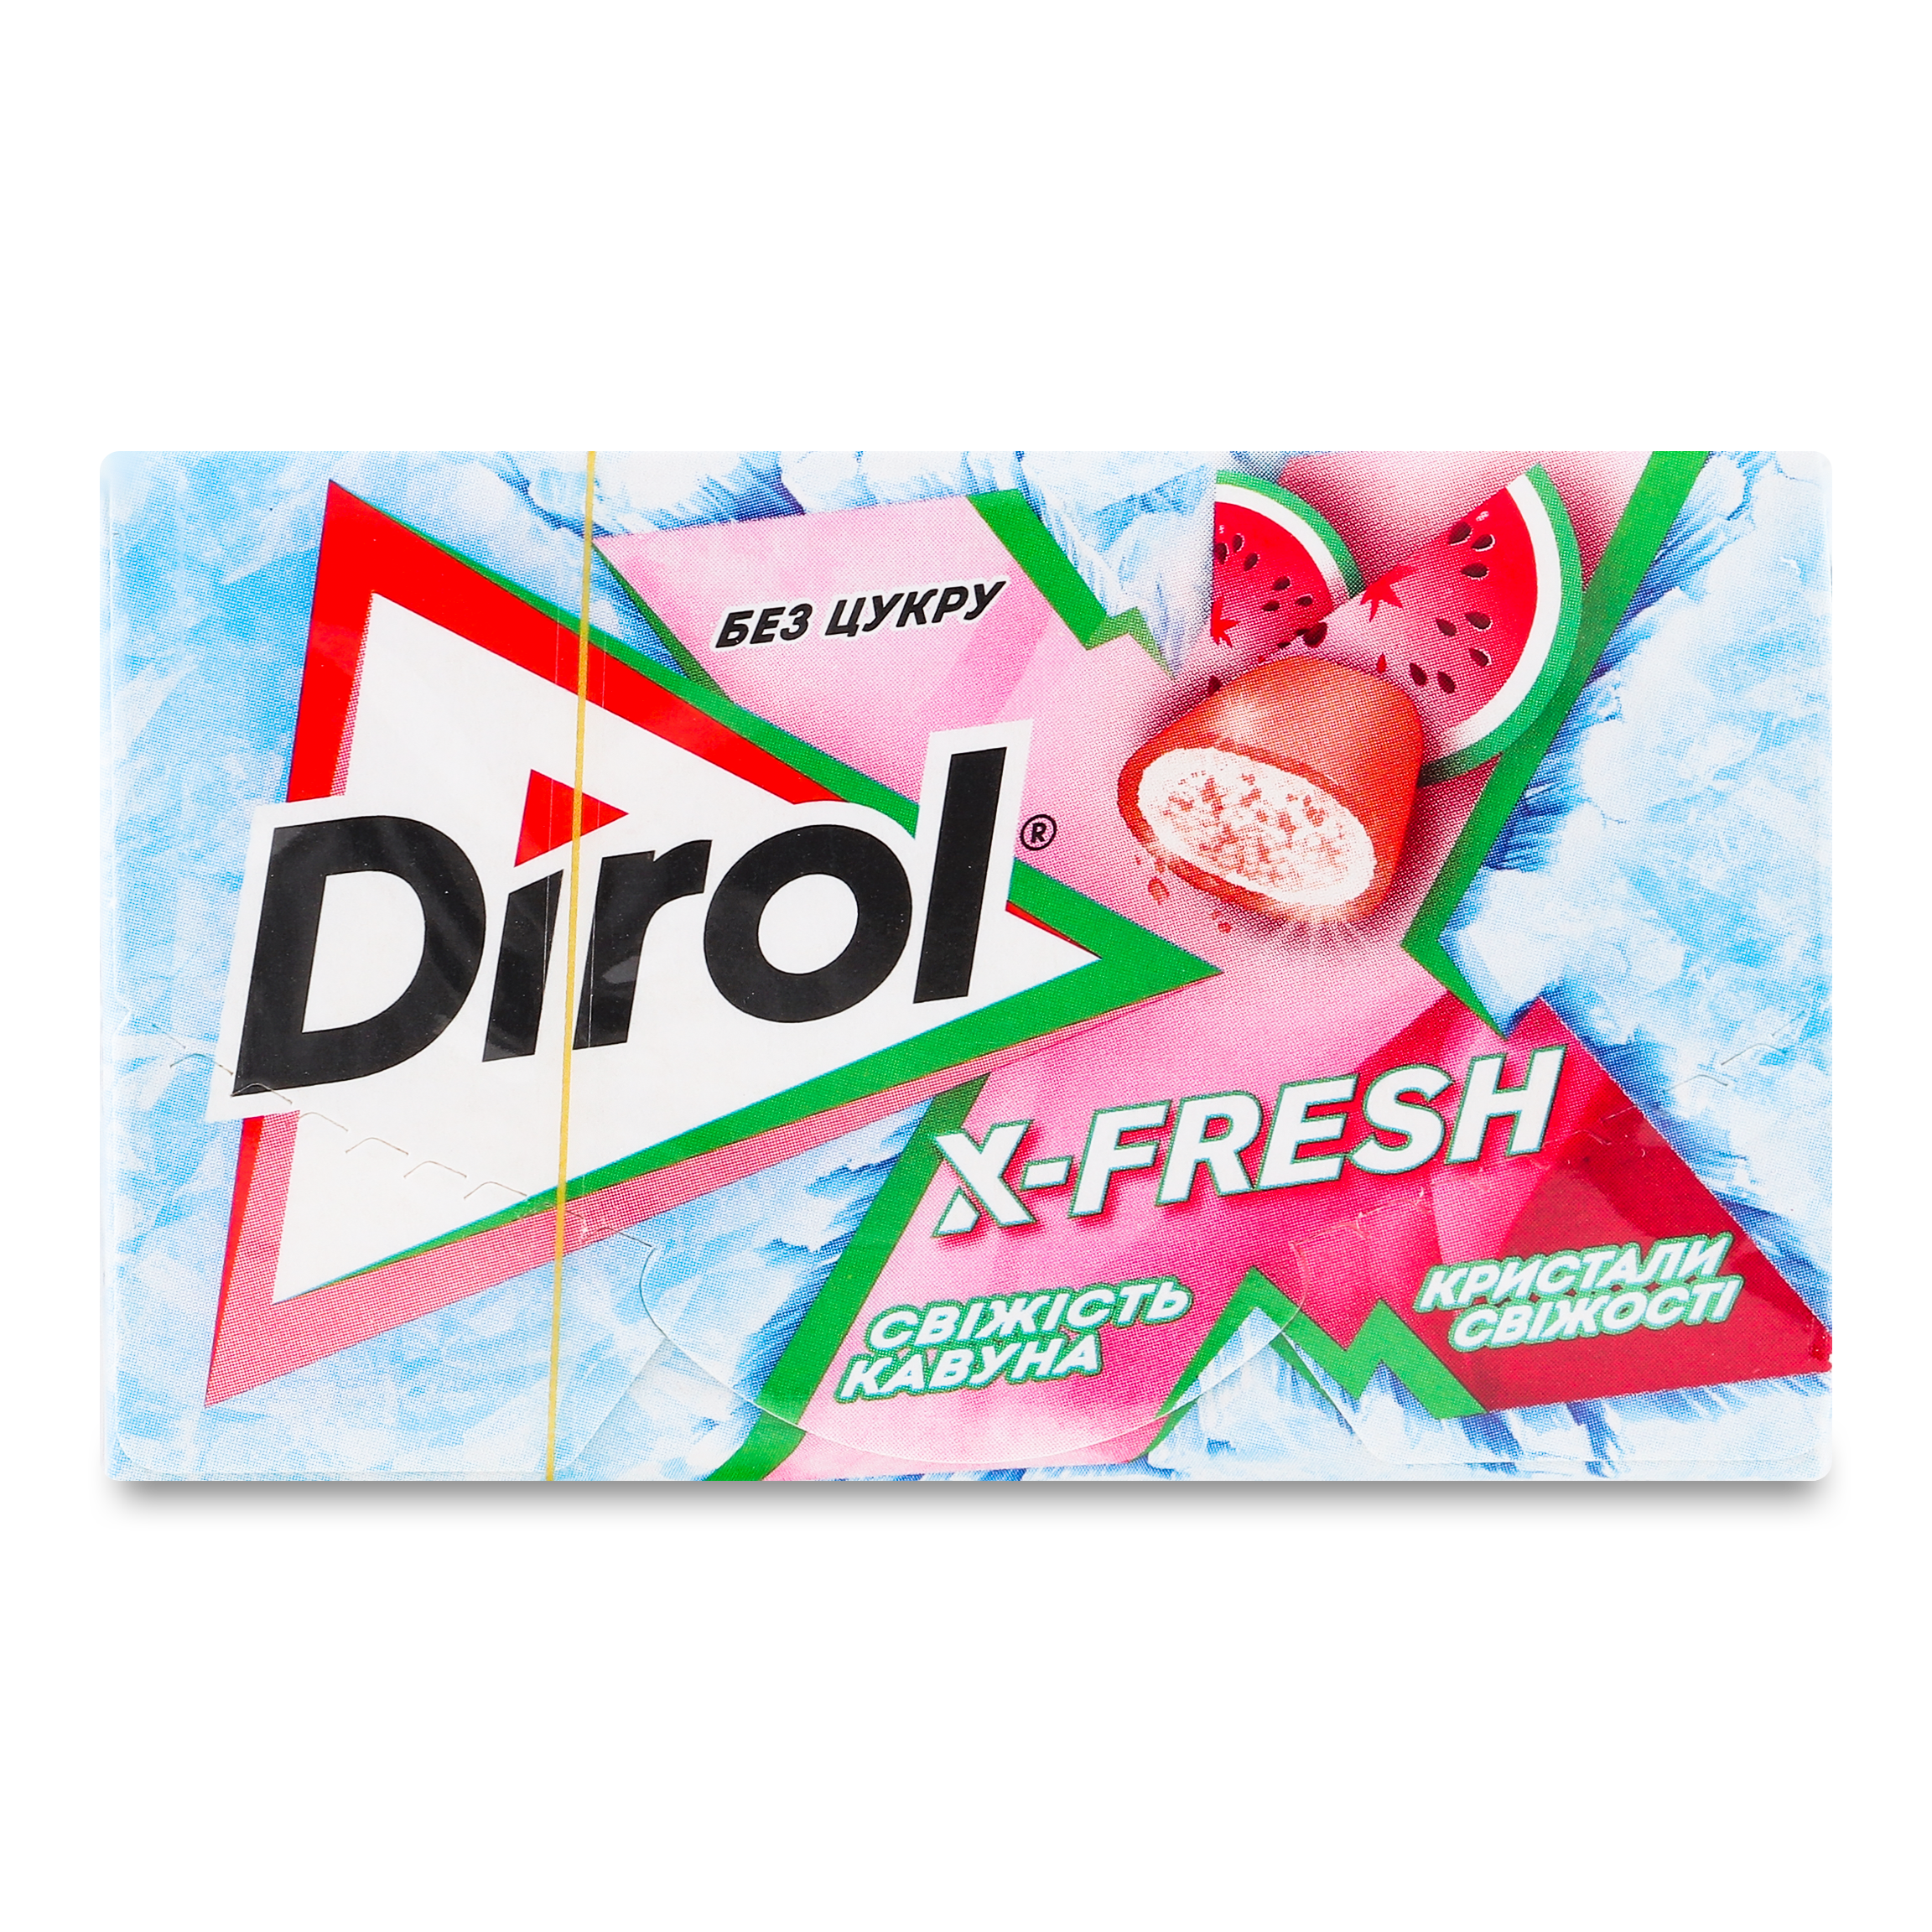 Dirol X-fresh Freshness of Watermelon Chewing Gum 18g